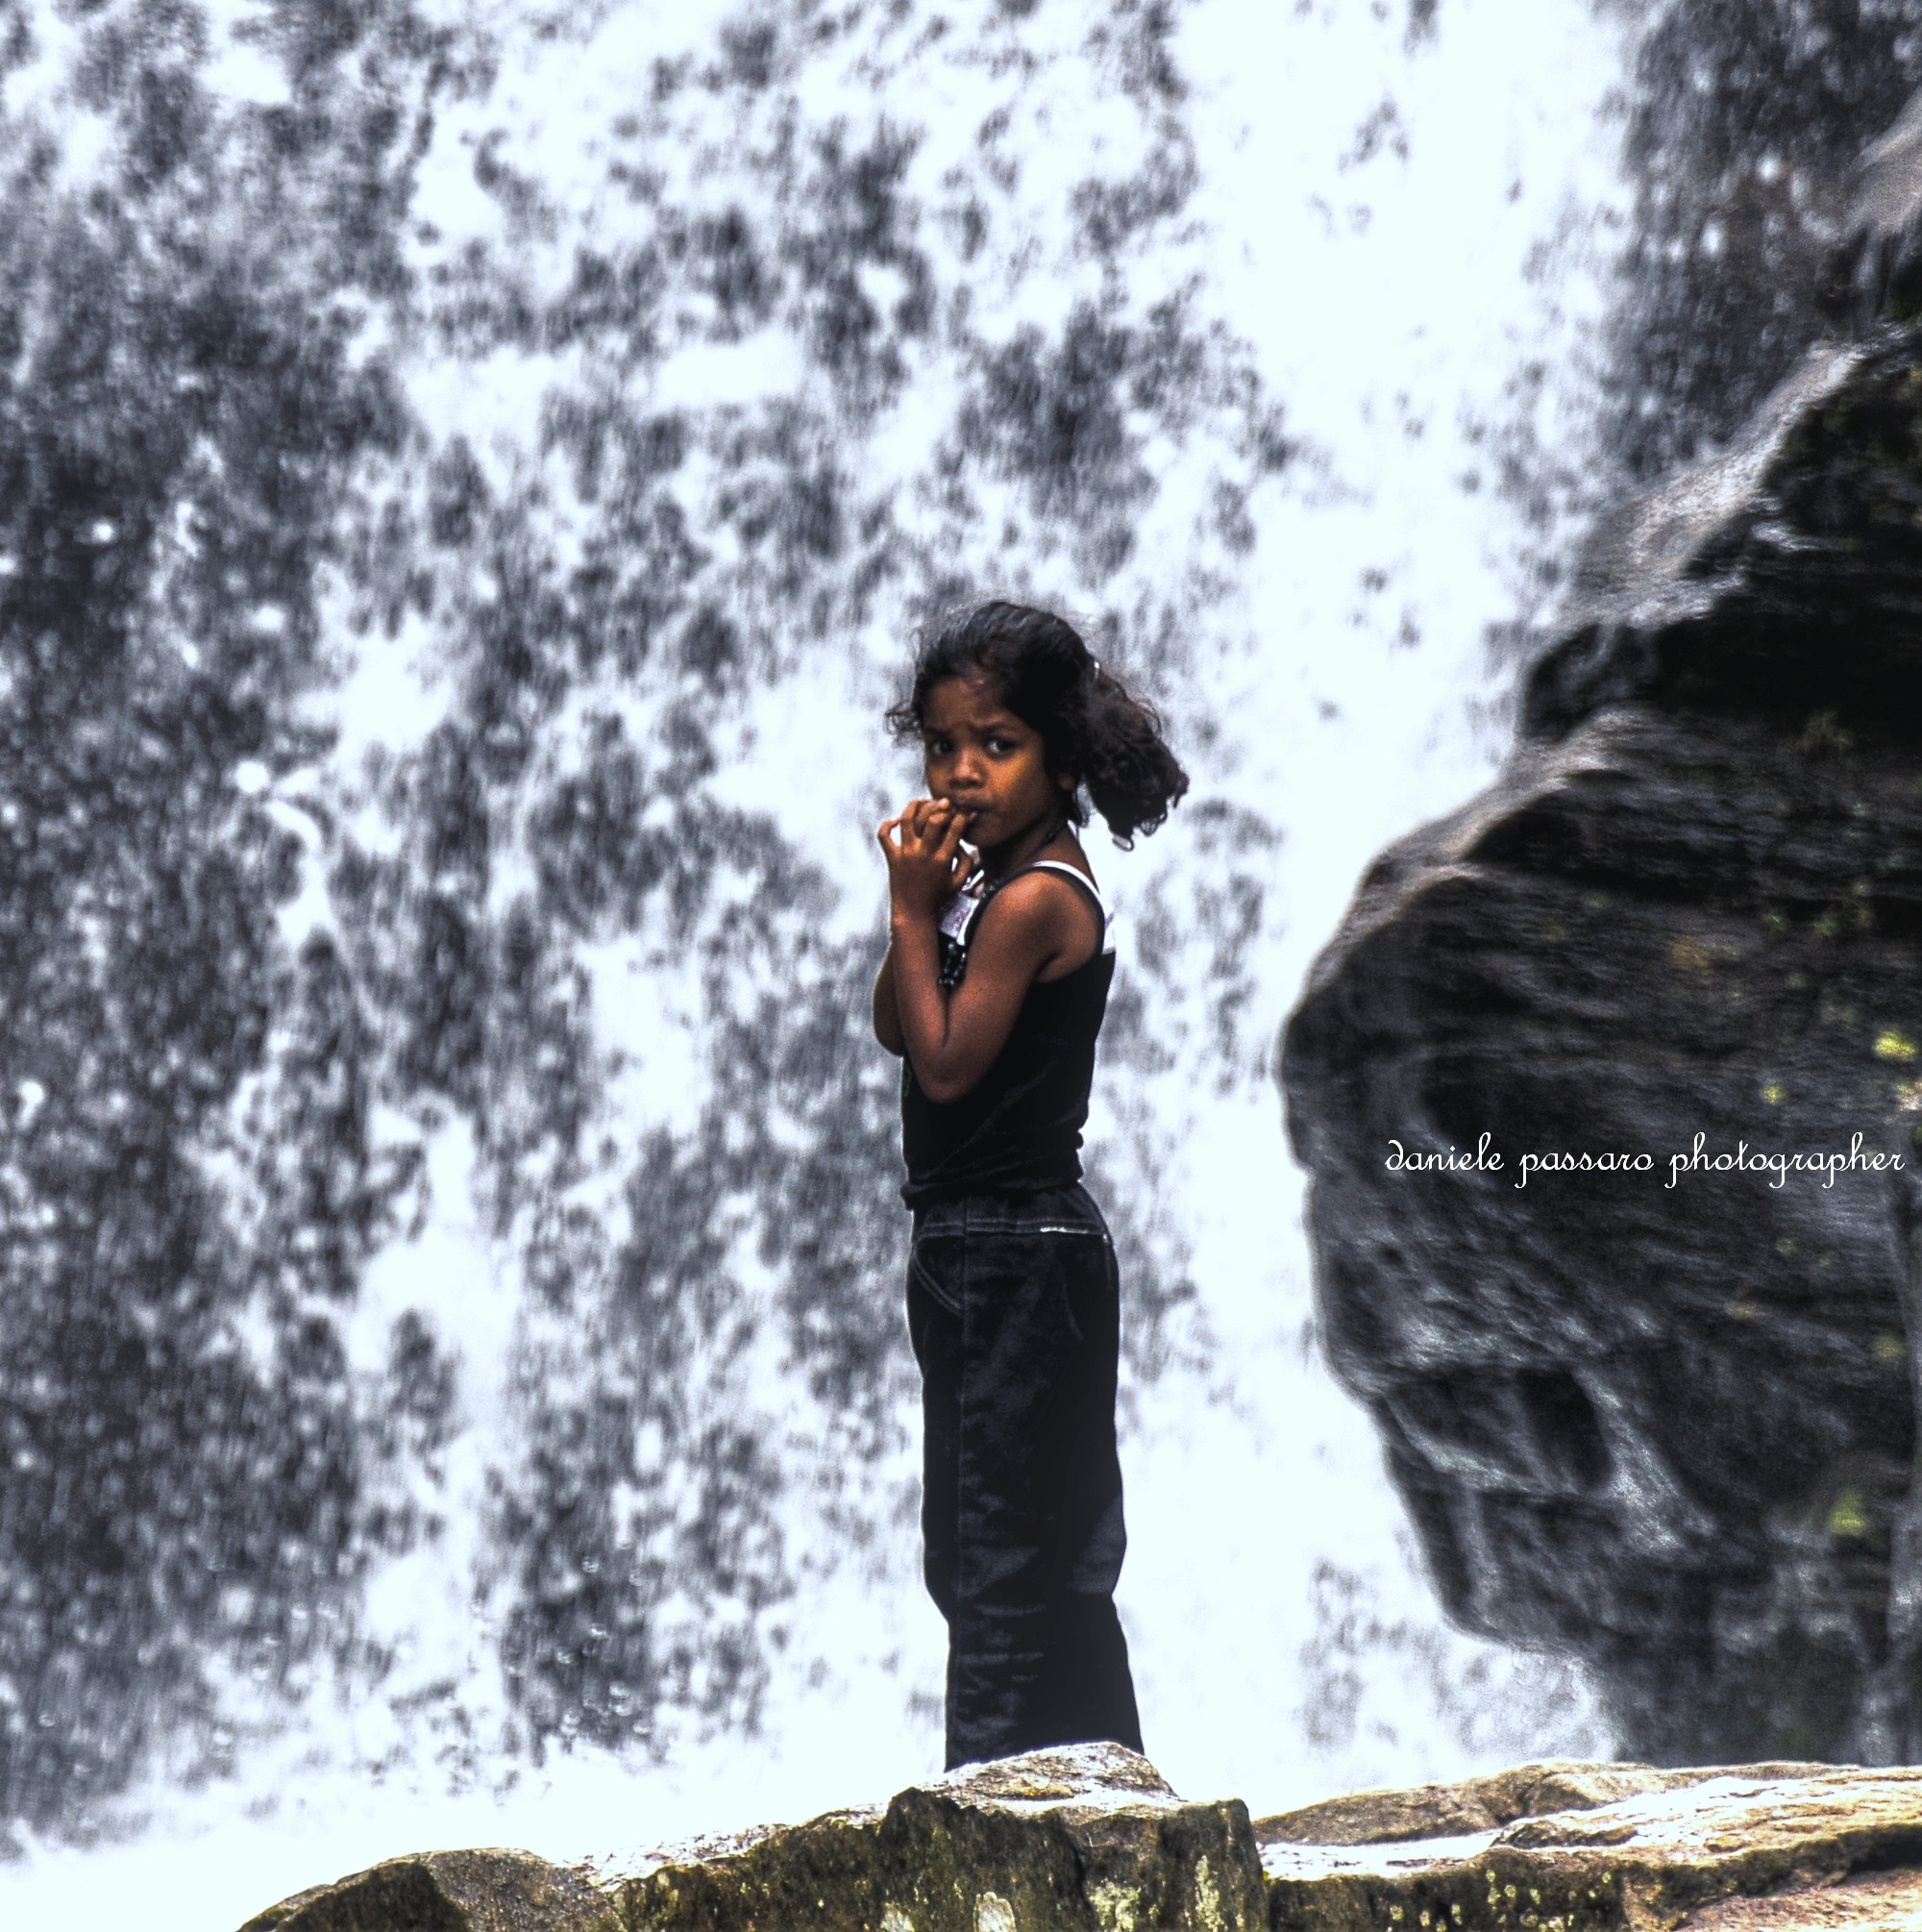 Sei Lanka - La bimba e la cascata...